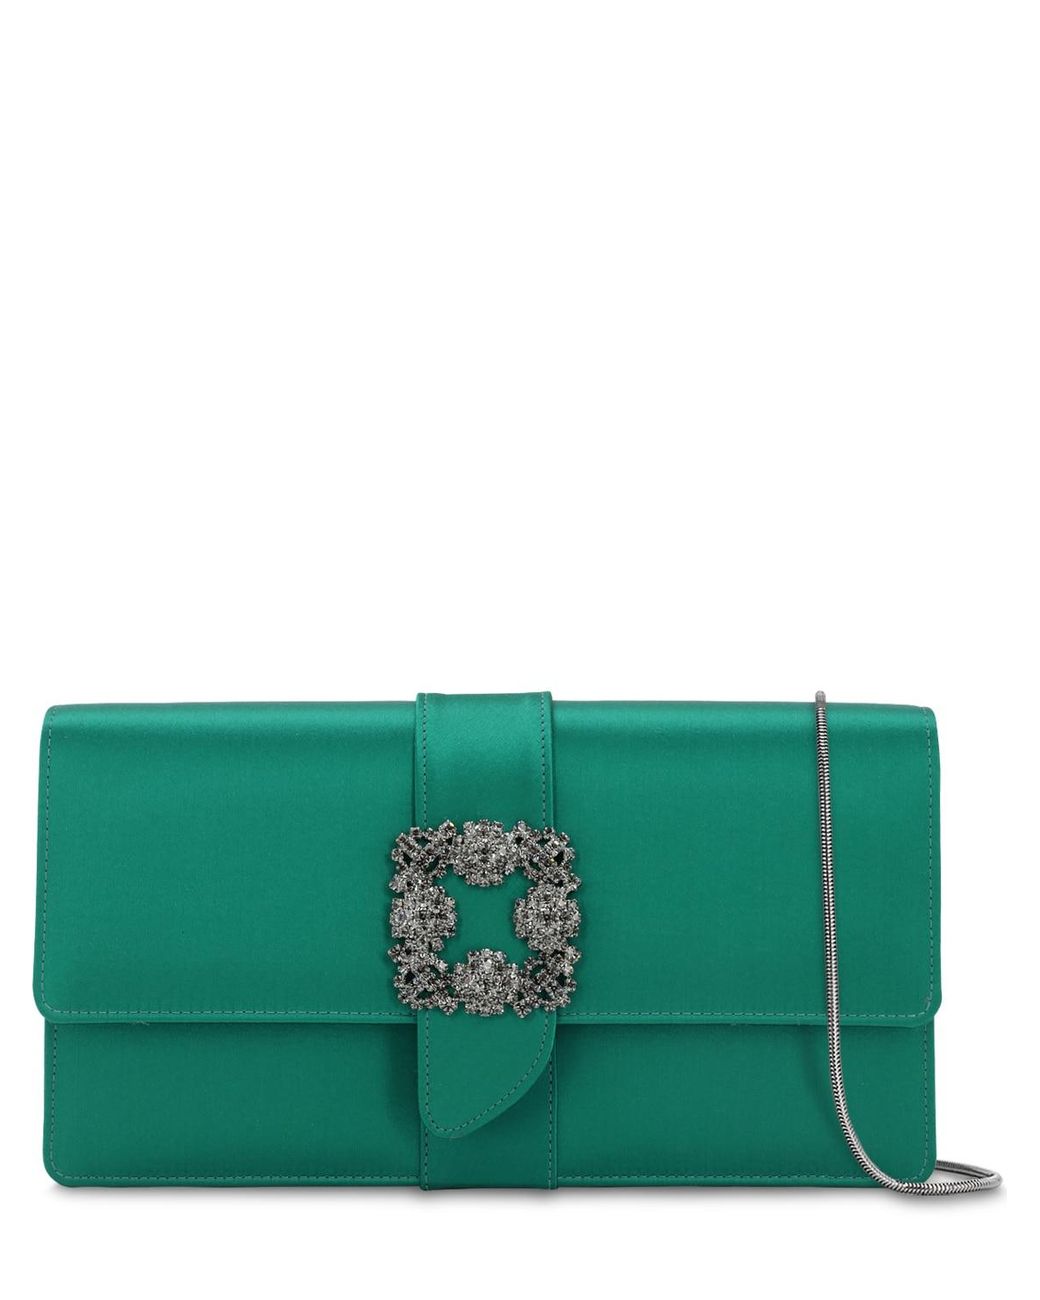 Manolo Blahnik Capri Embellished Silk Satin Clutch in Emerald (Green ...